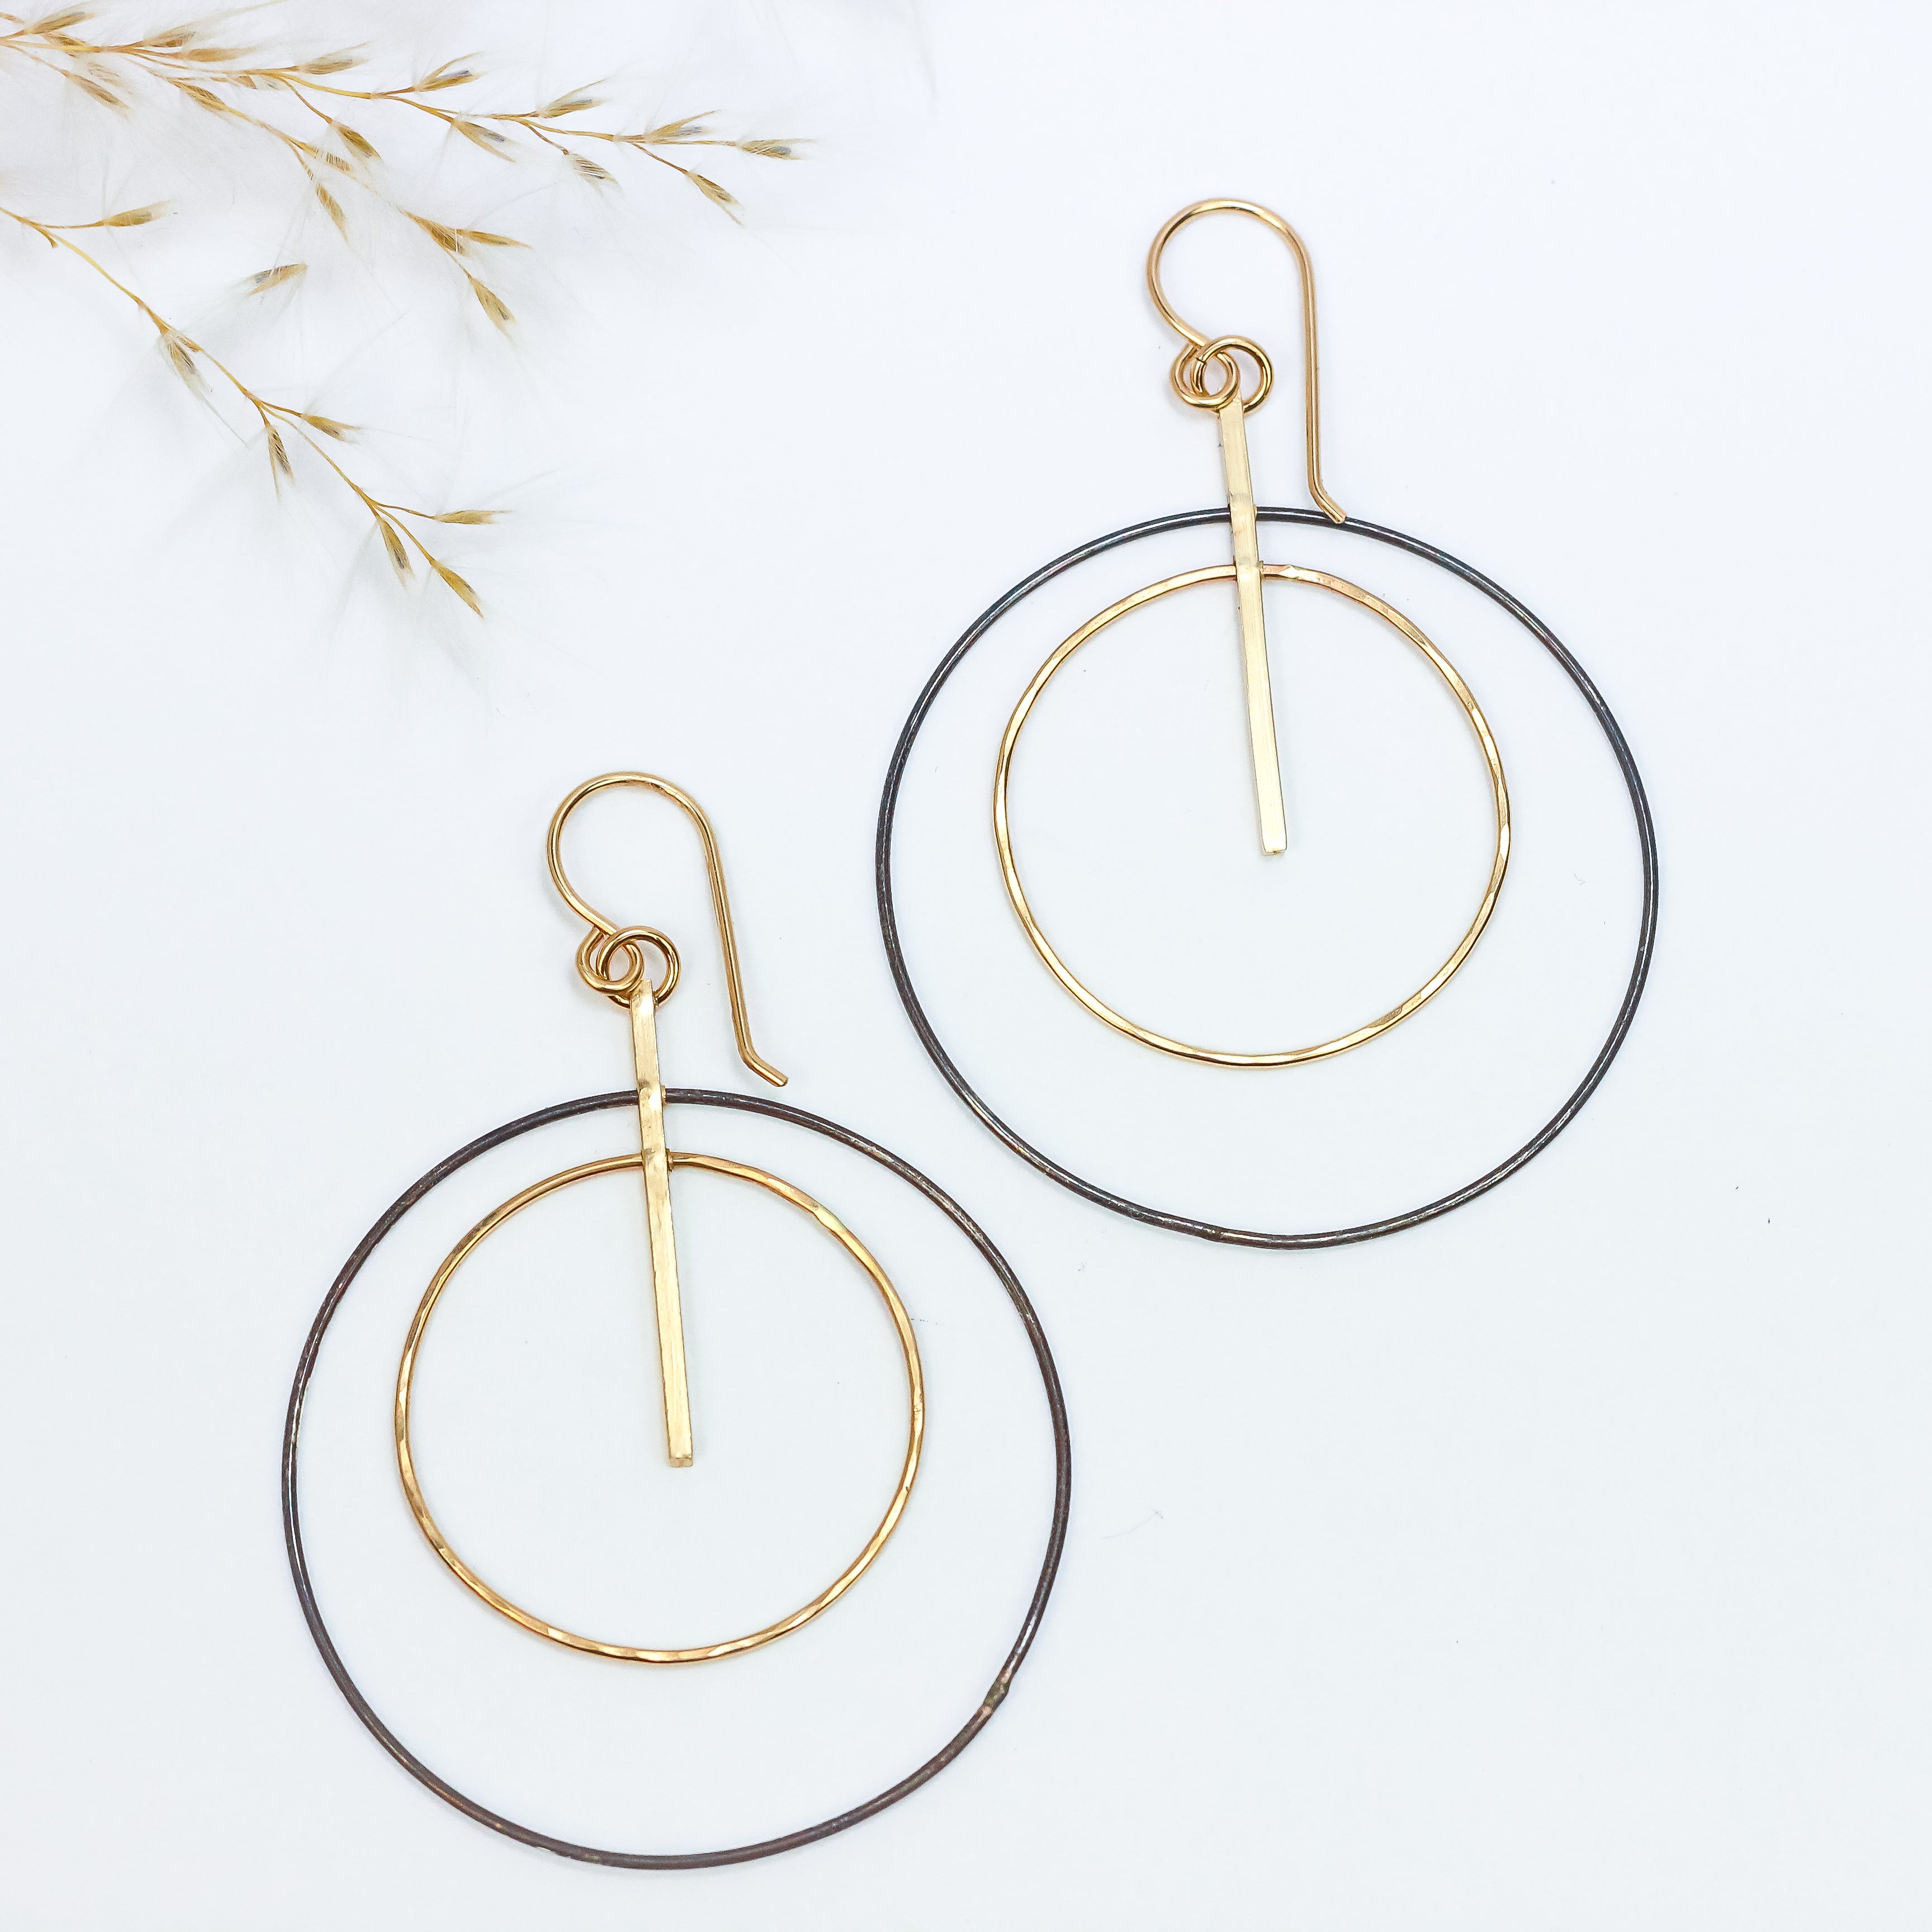 handmade mixed metal oxidized sterling gold filled hoop earrings laura j designs